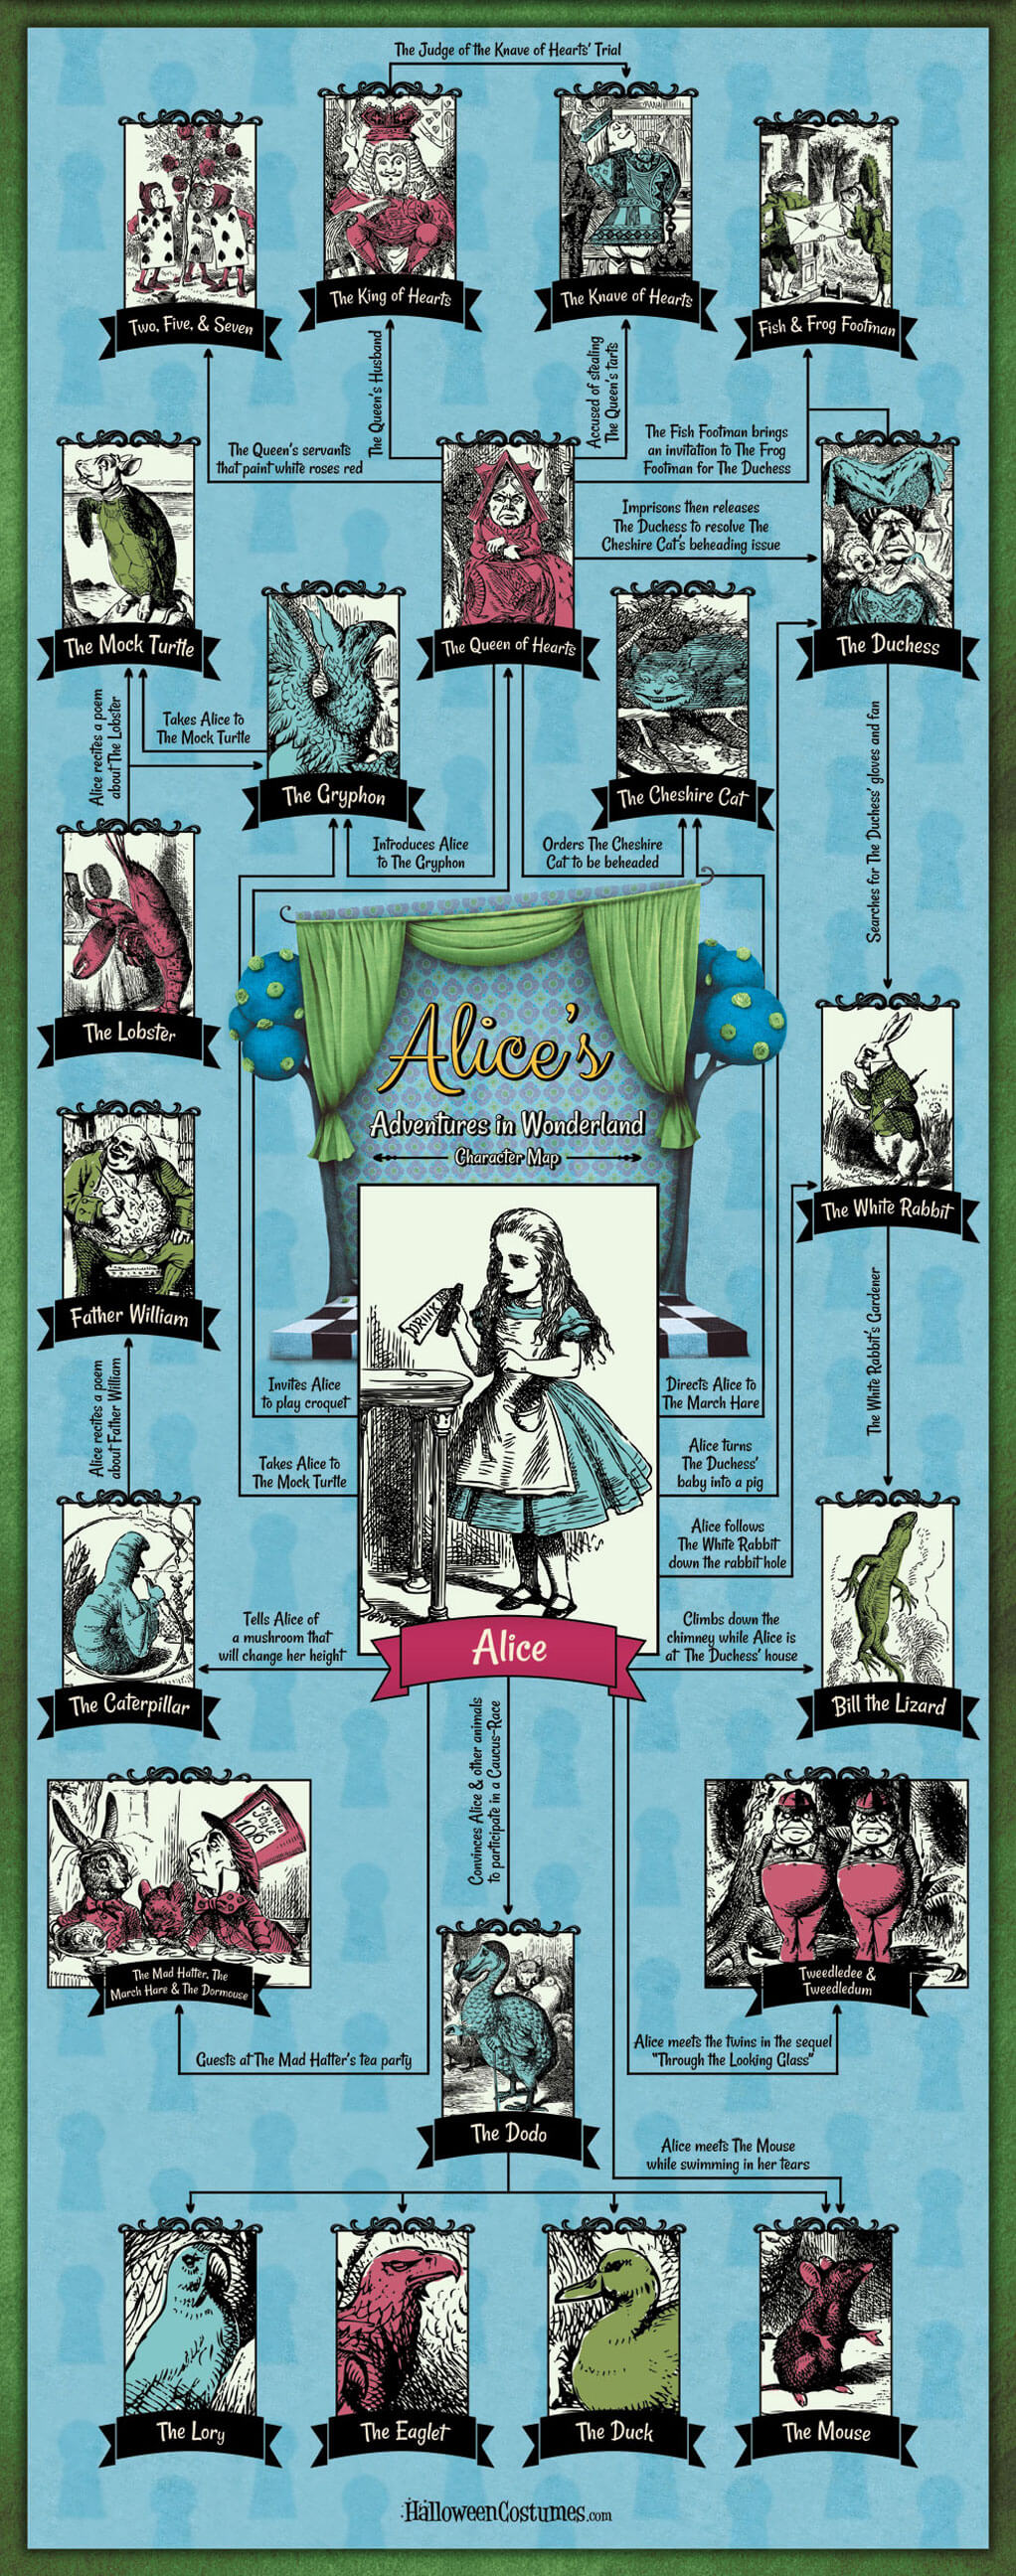 Alice's Adventures in Wonderland Character Guide Infographic